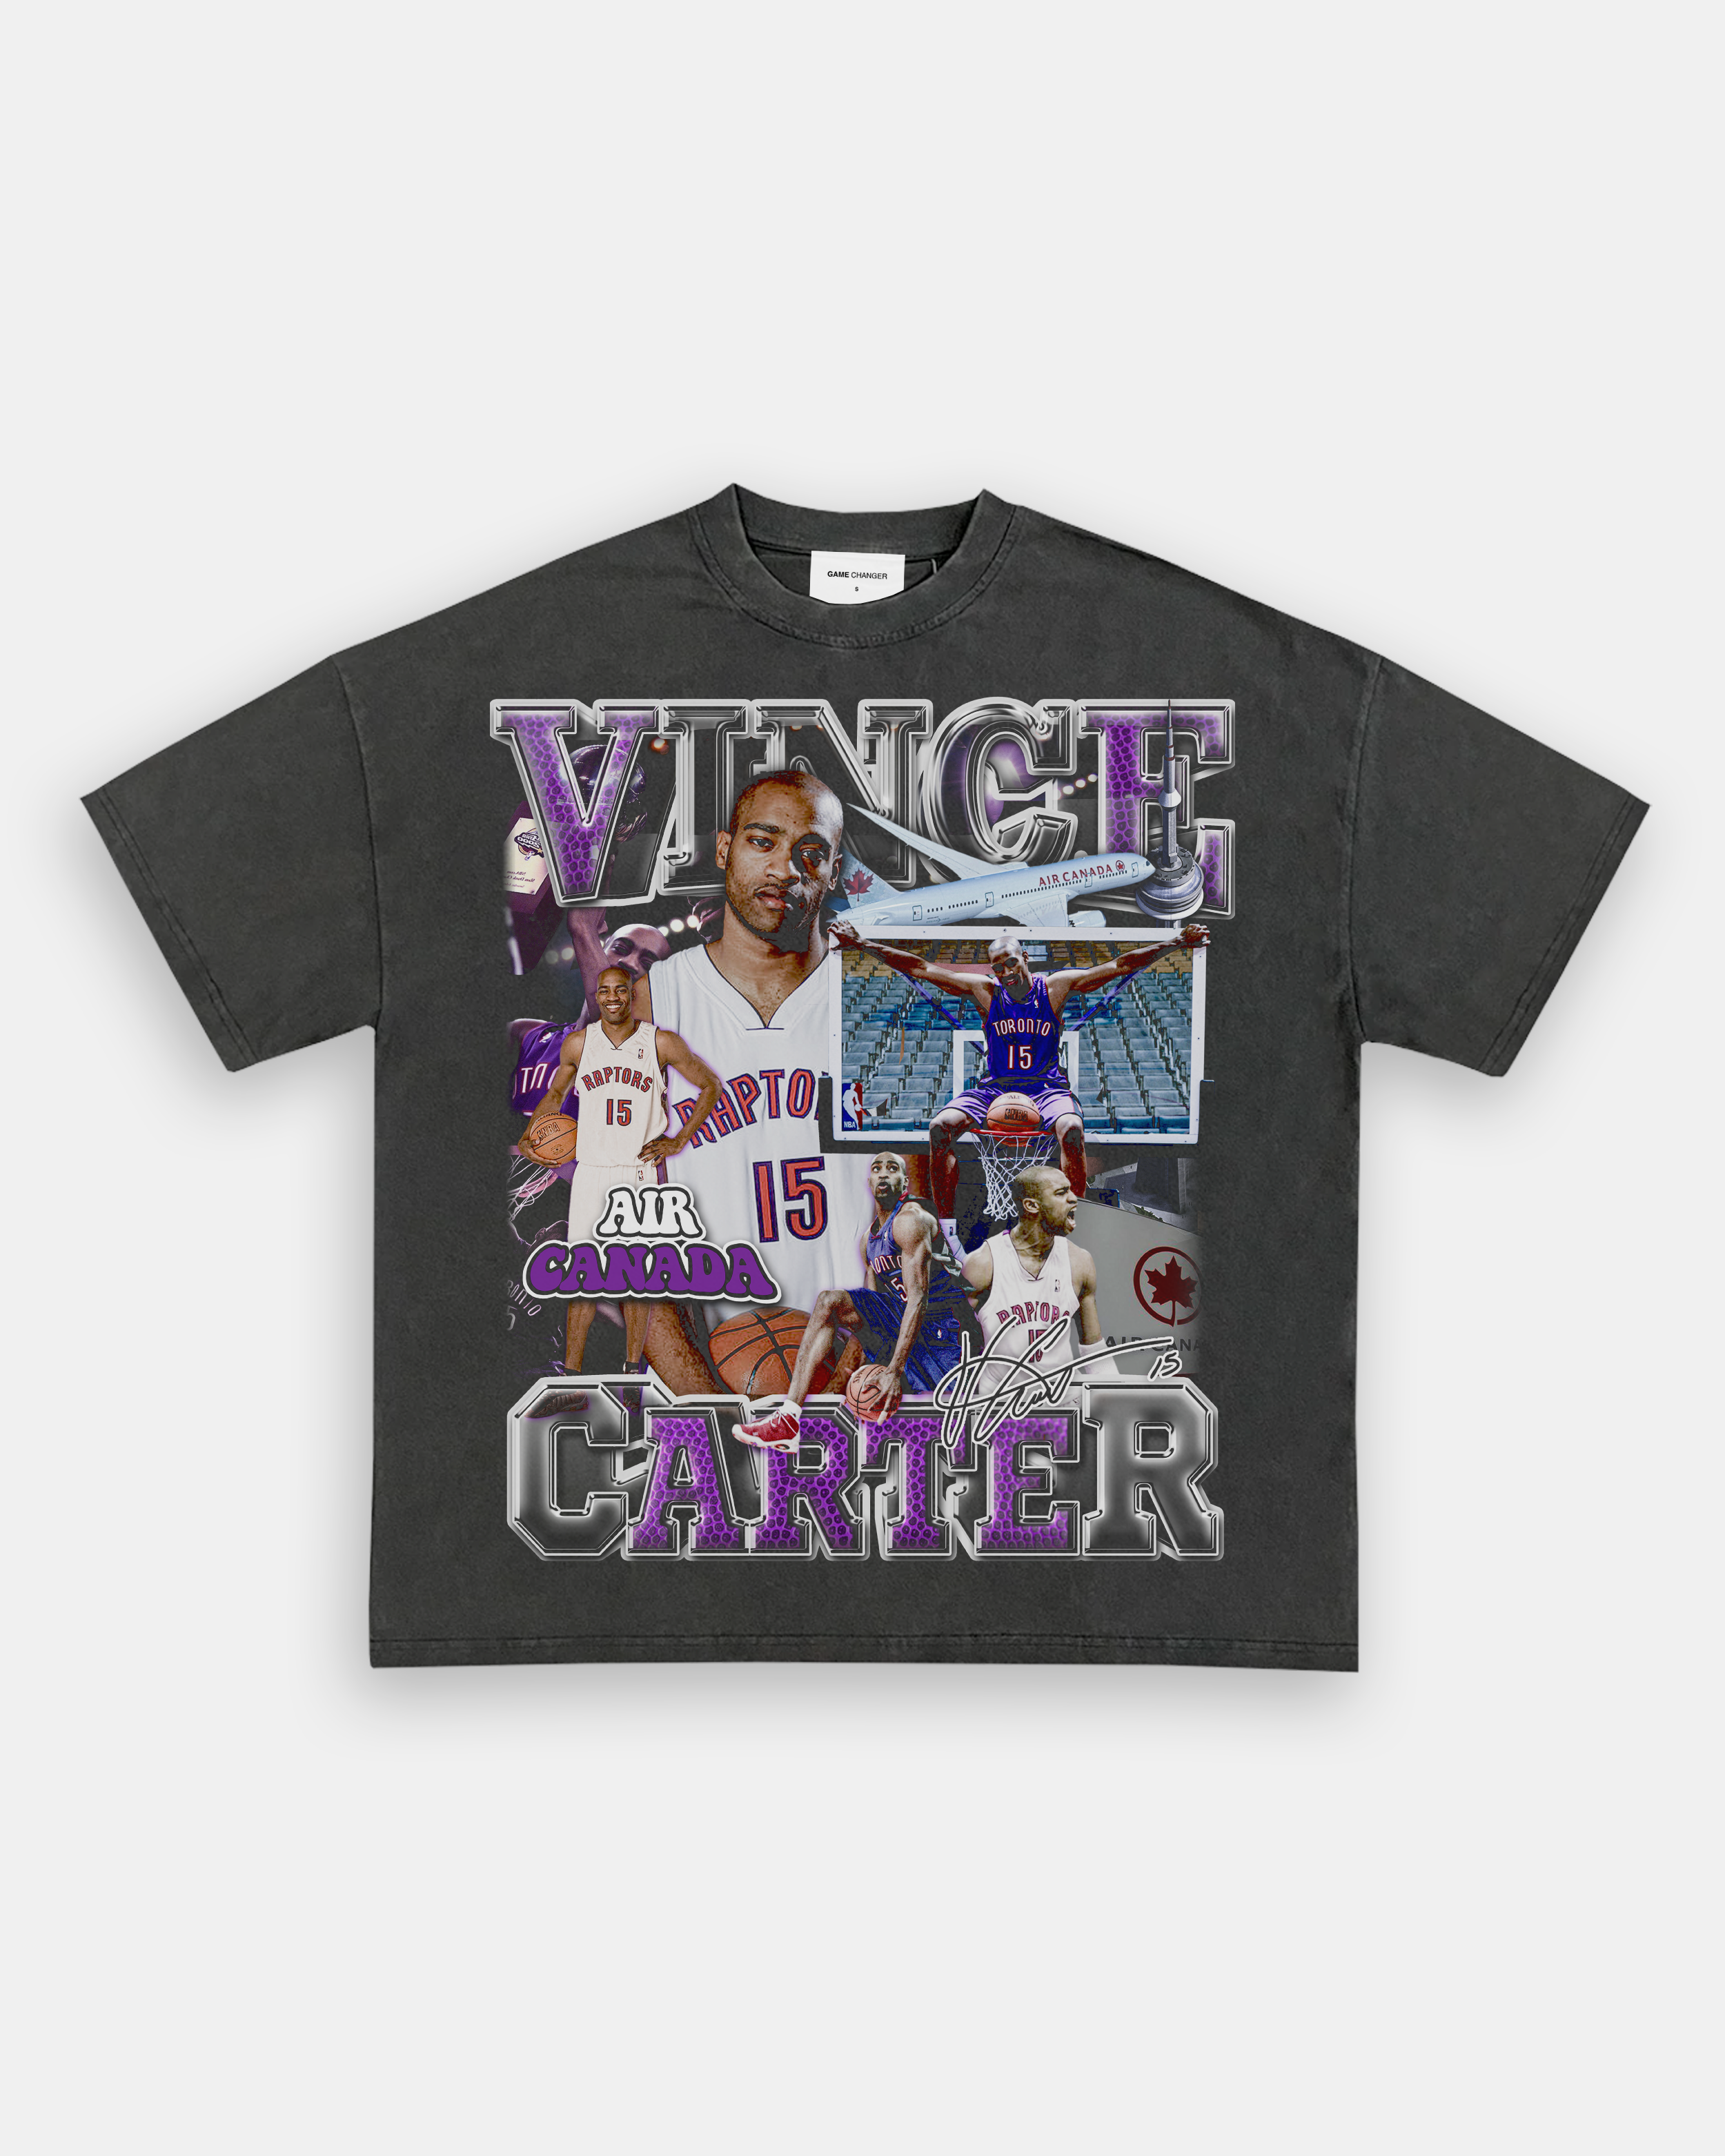 Vince Carter Toronto Raptors NBA Basketball Black T-Shirt S-5XL